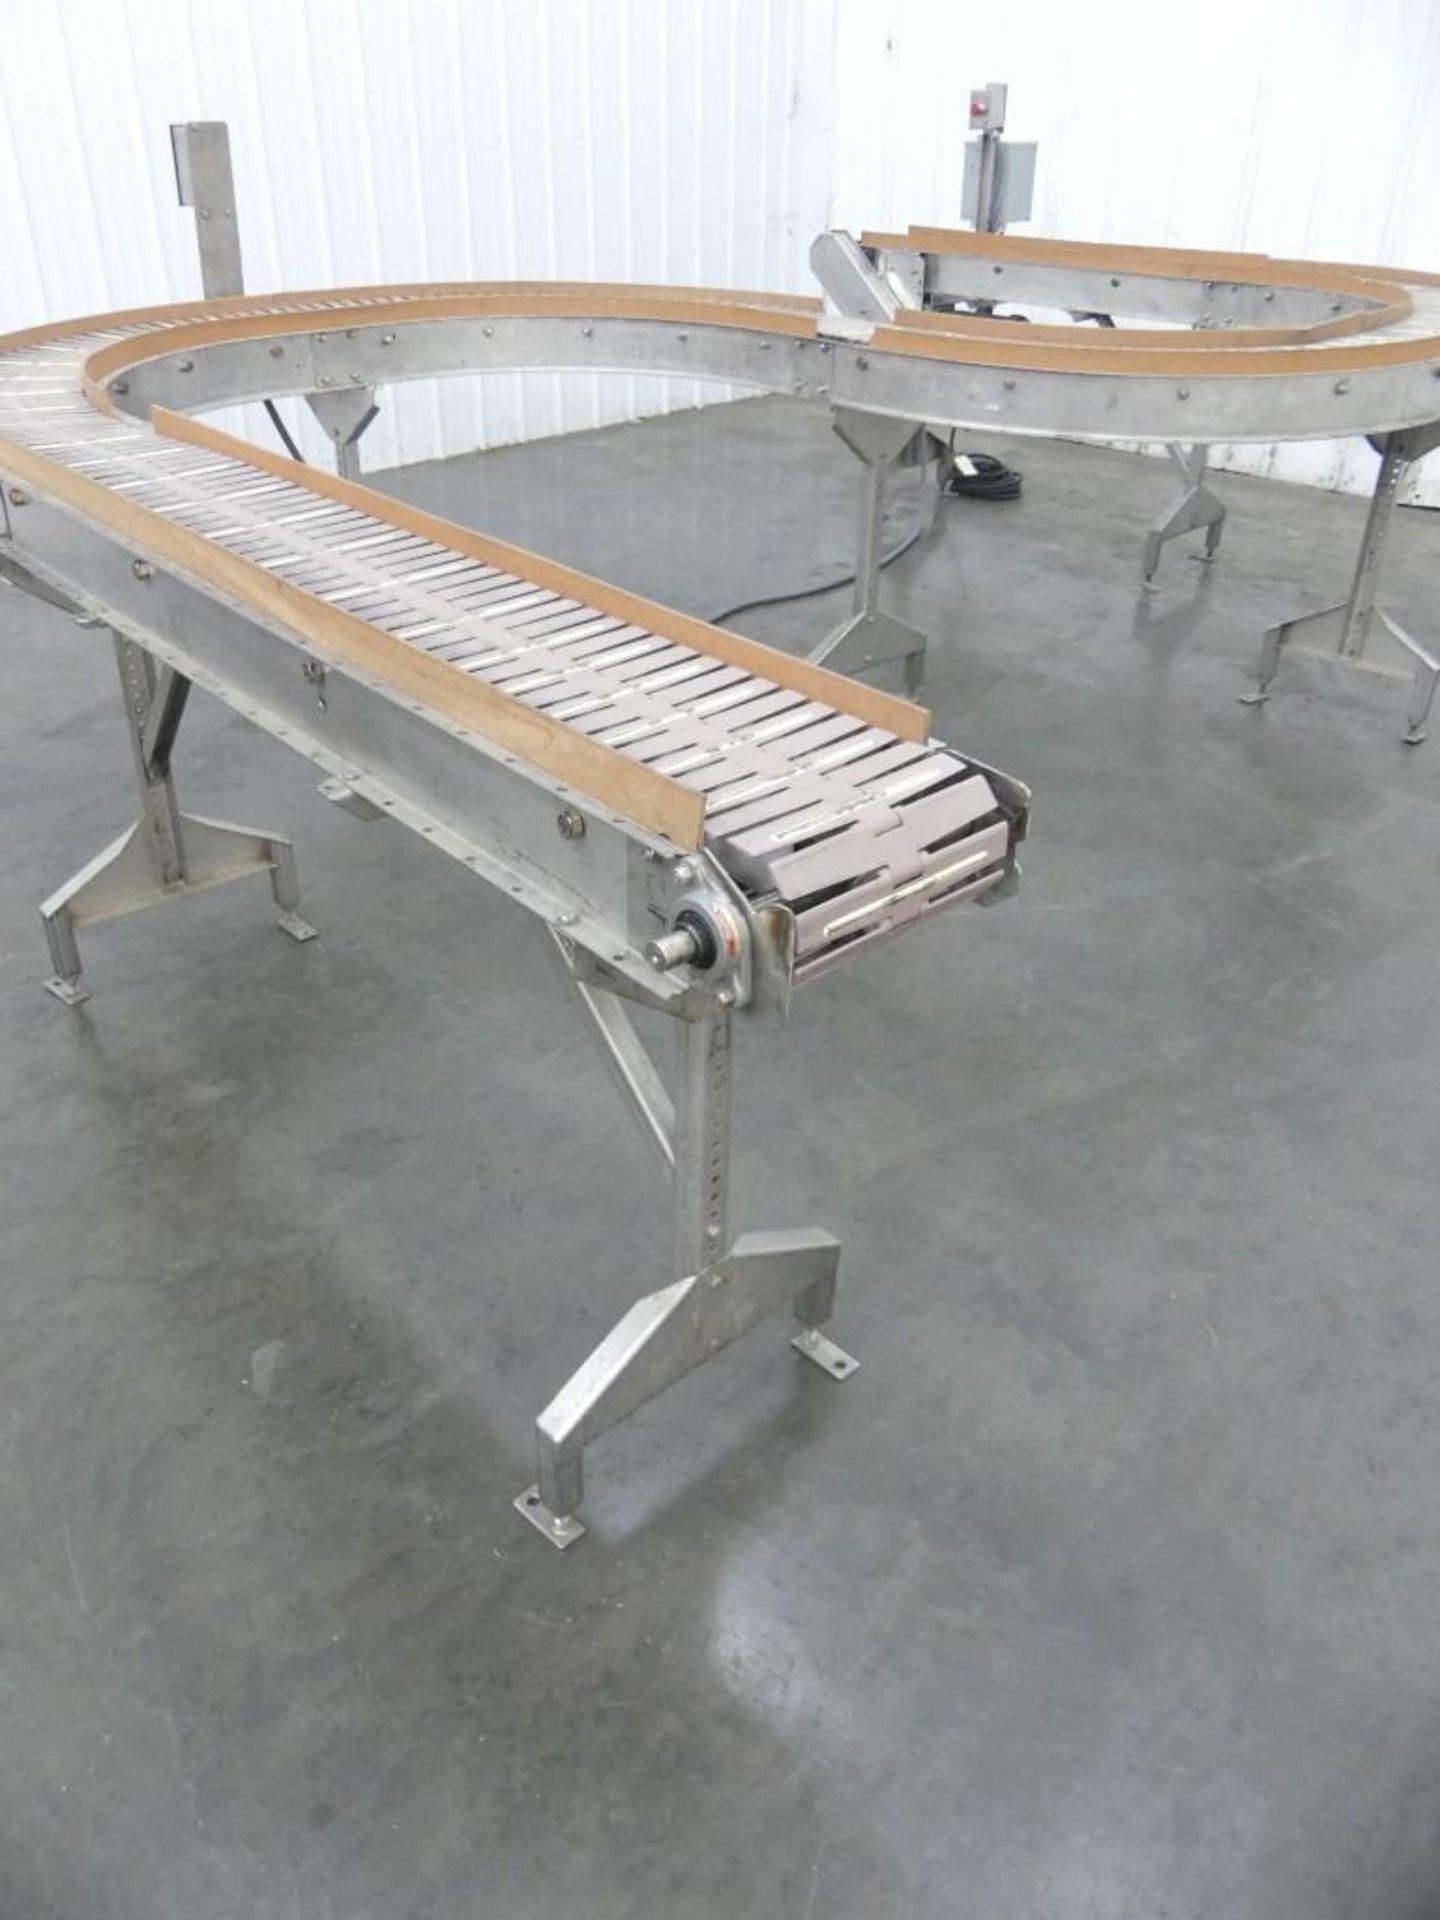 Serpentine Table-Top Conveyor 10" Wide x 32' Long - Image 8 of 23